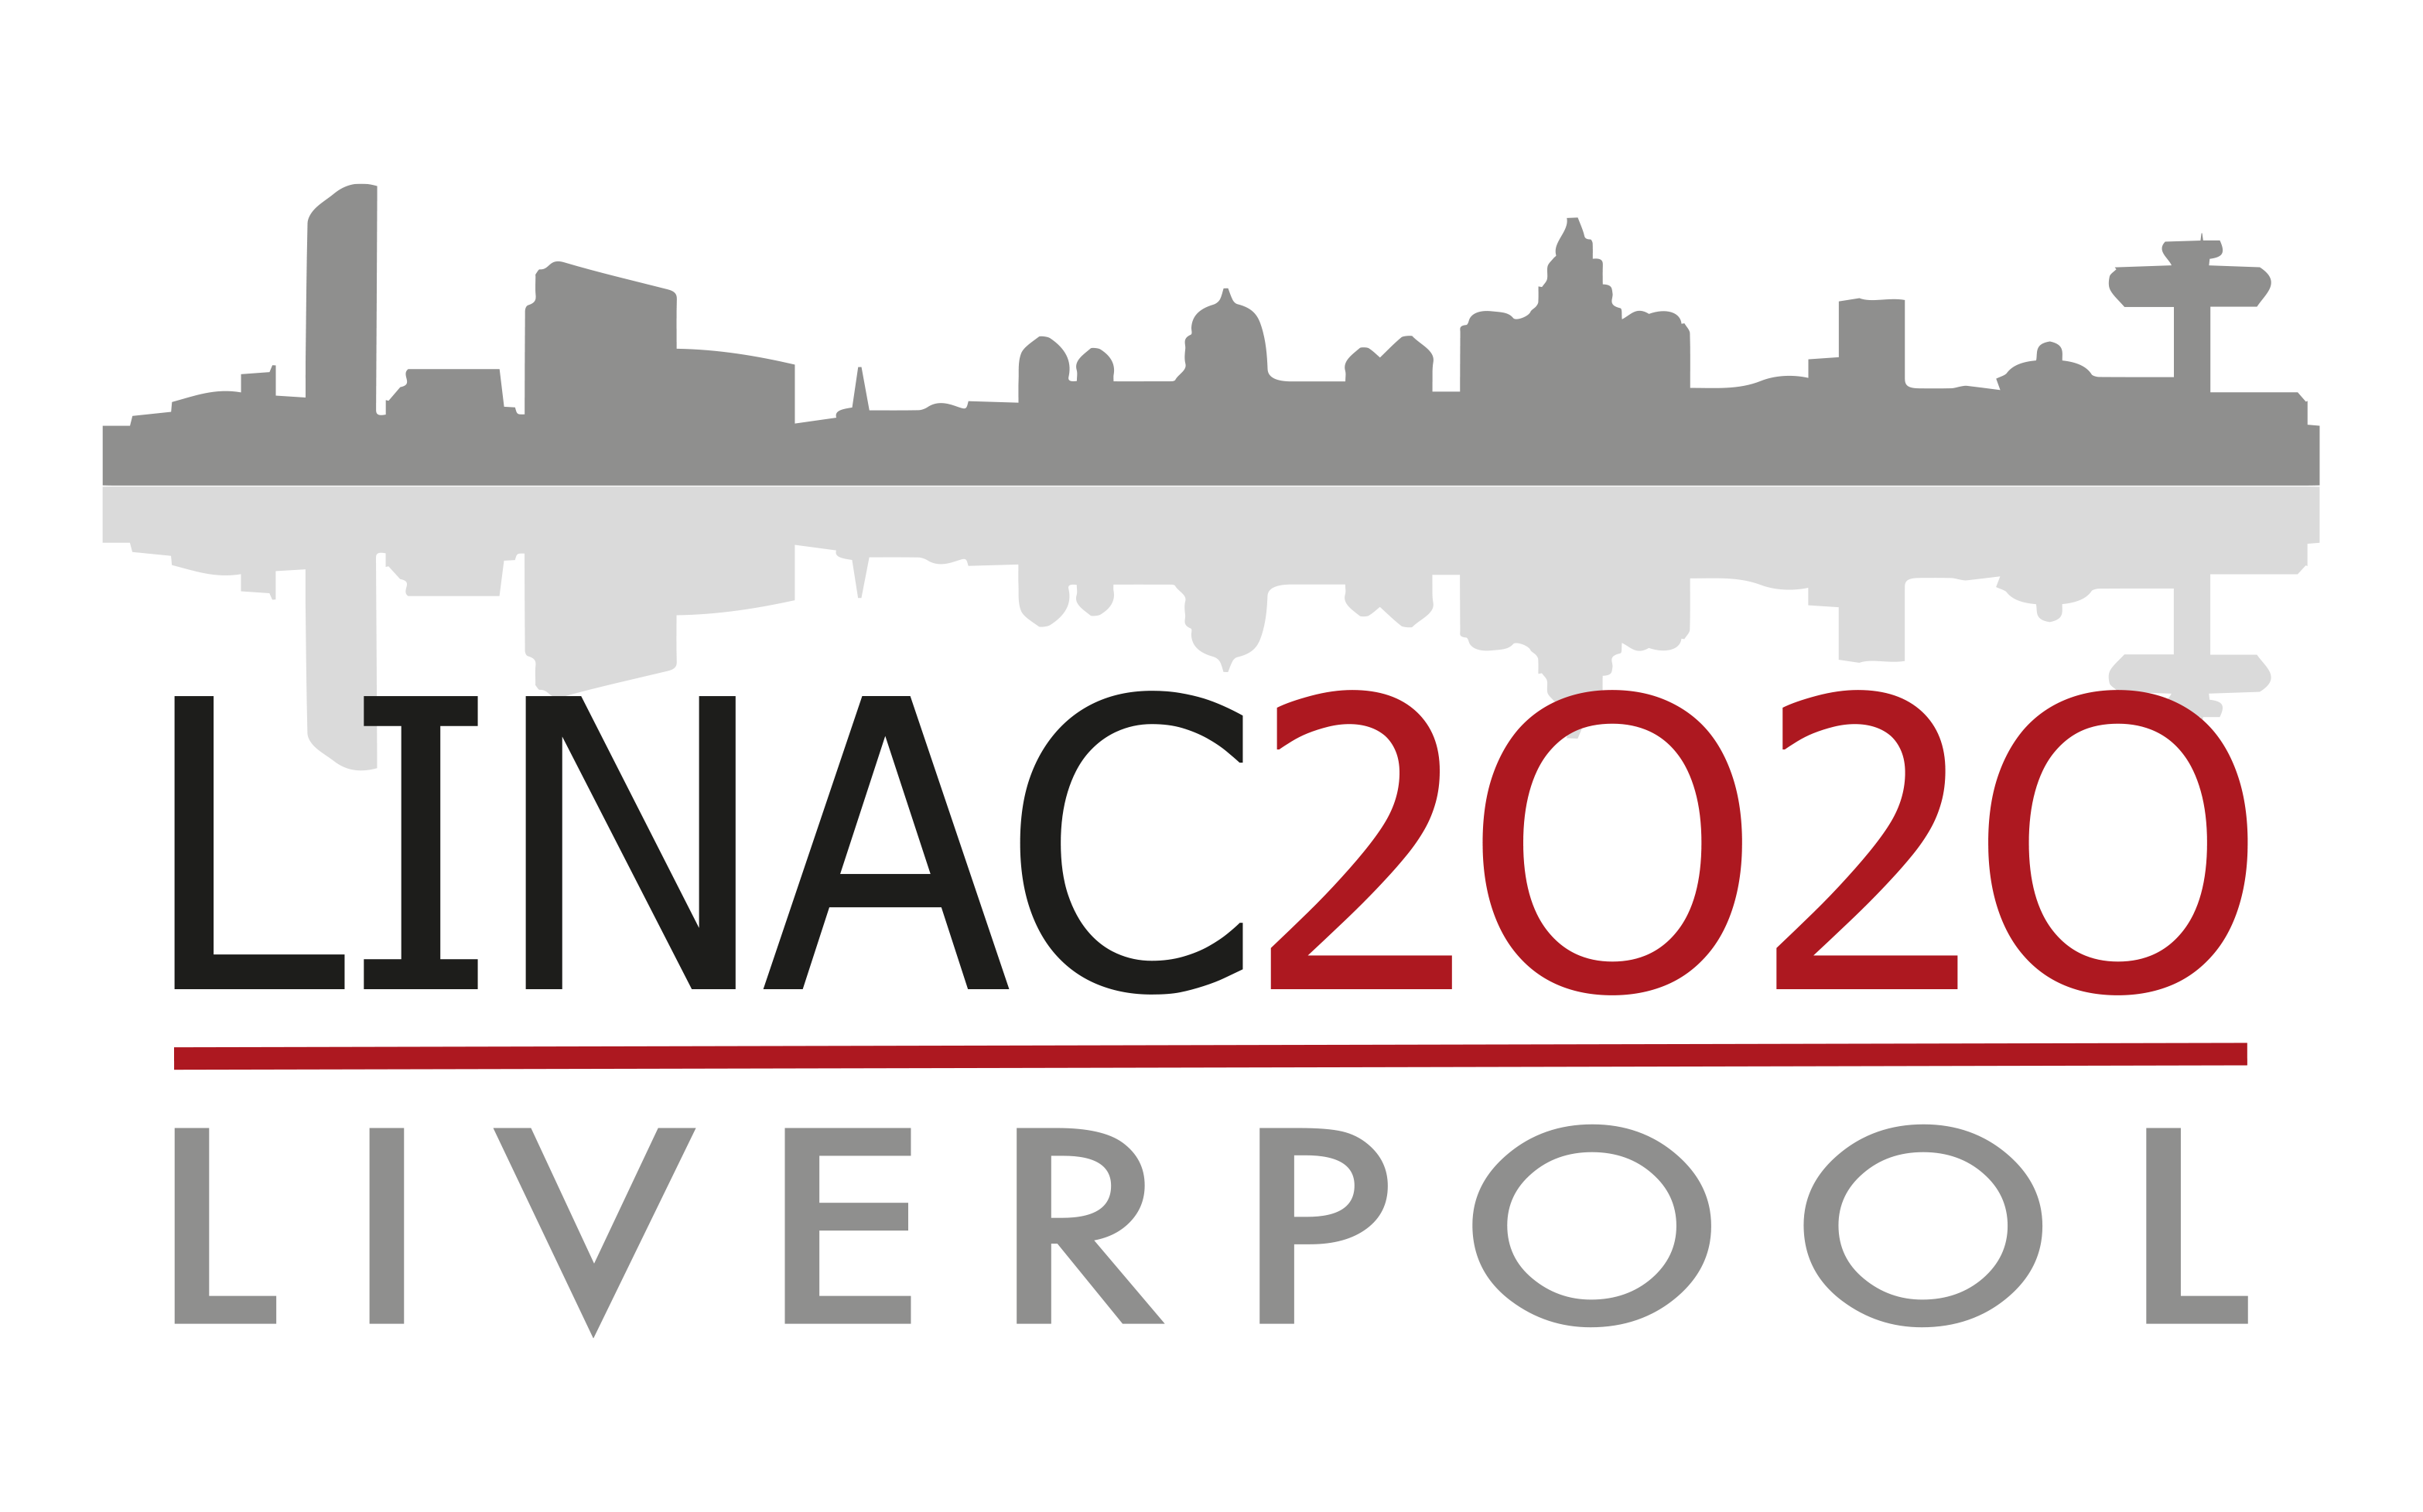 LINAC 2020 logo